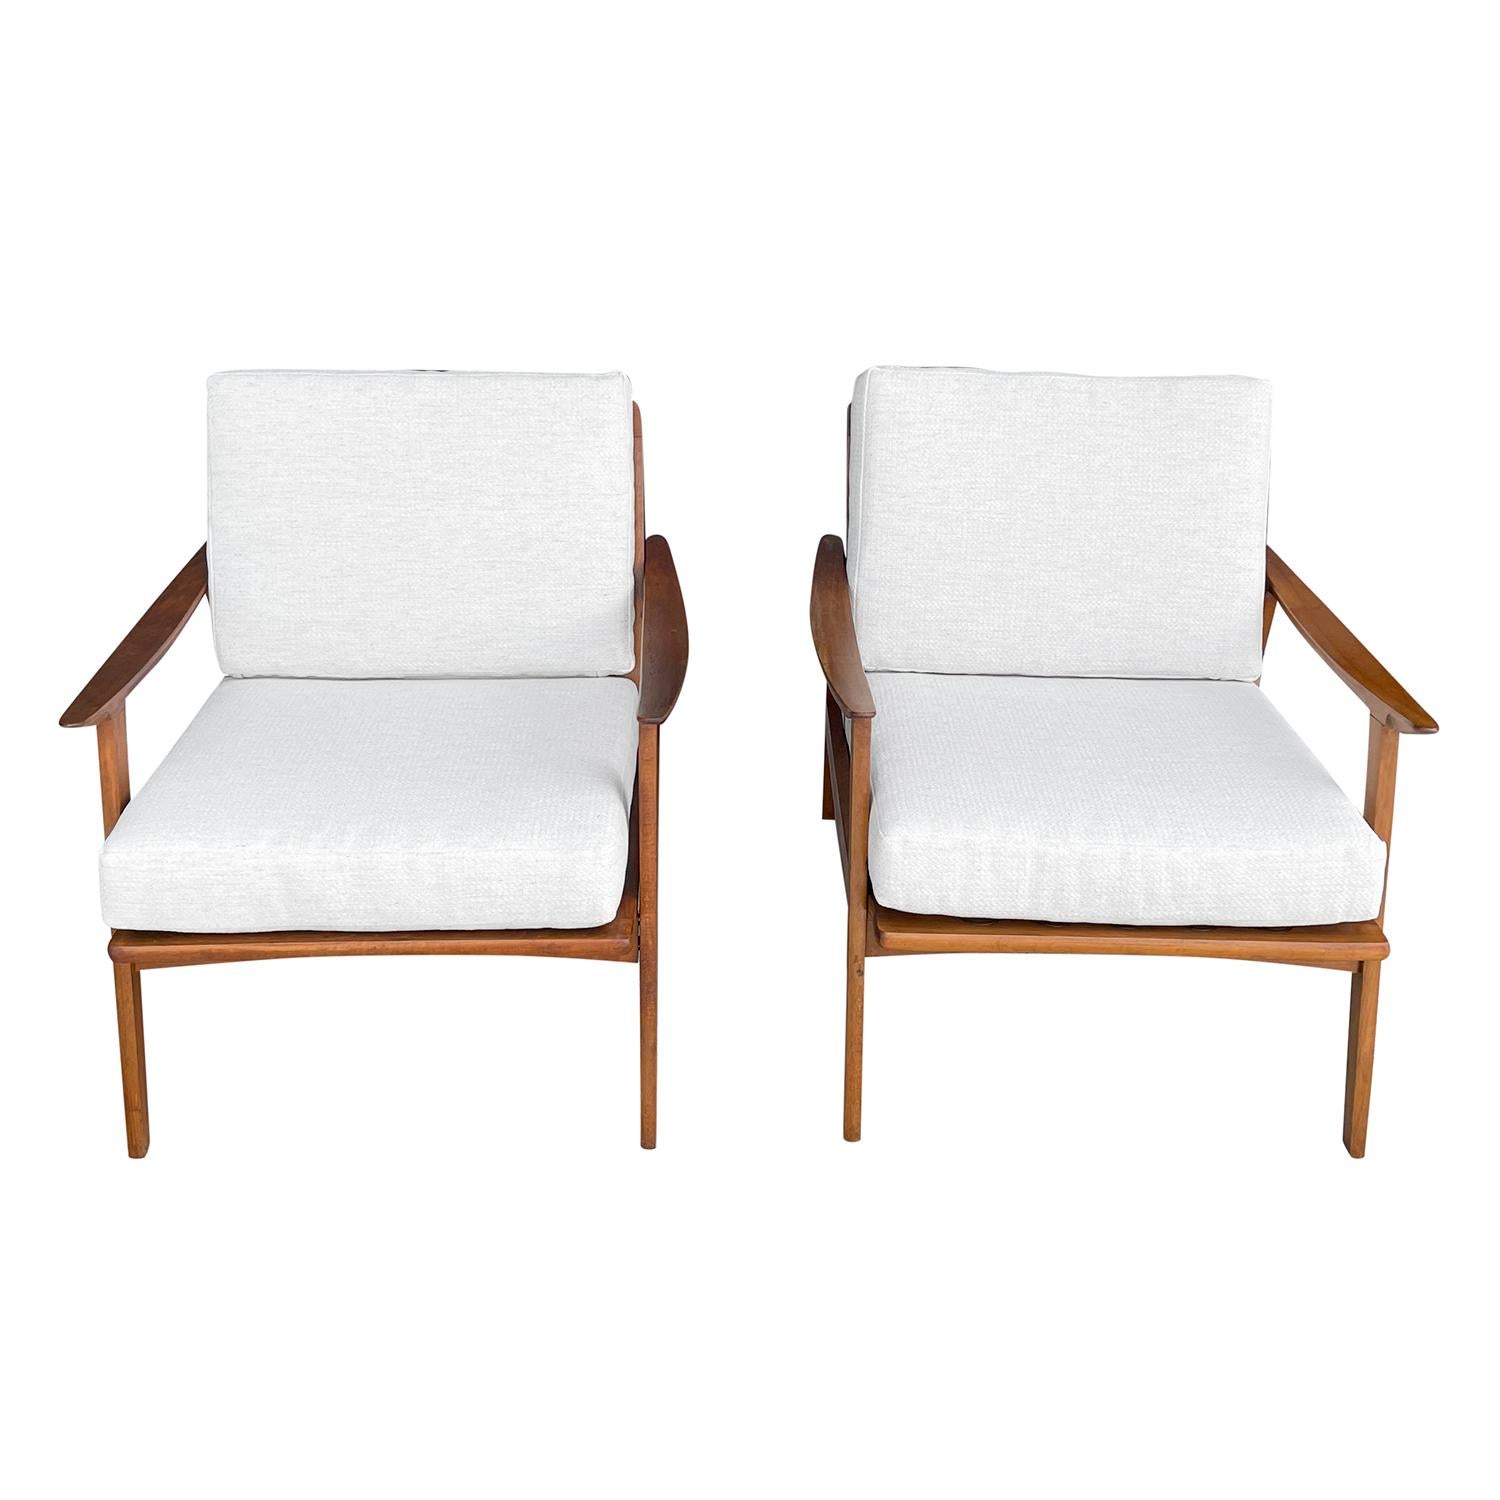 Mid-Century Modern 20th Century Danish Vintage Modern Pair of Open Teak Chairs by Kai Kristiansen For Sale